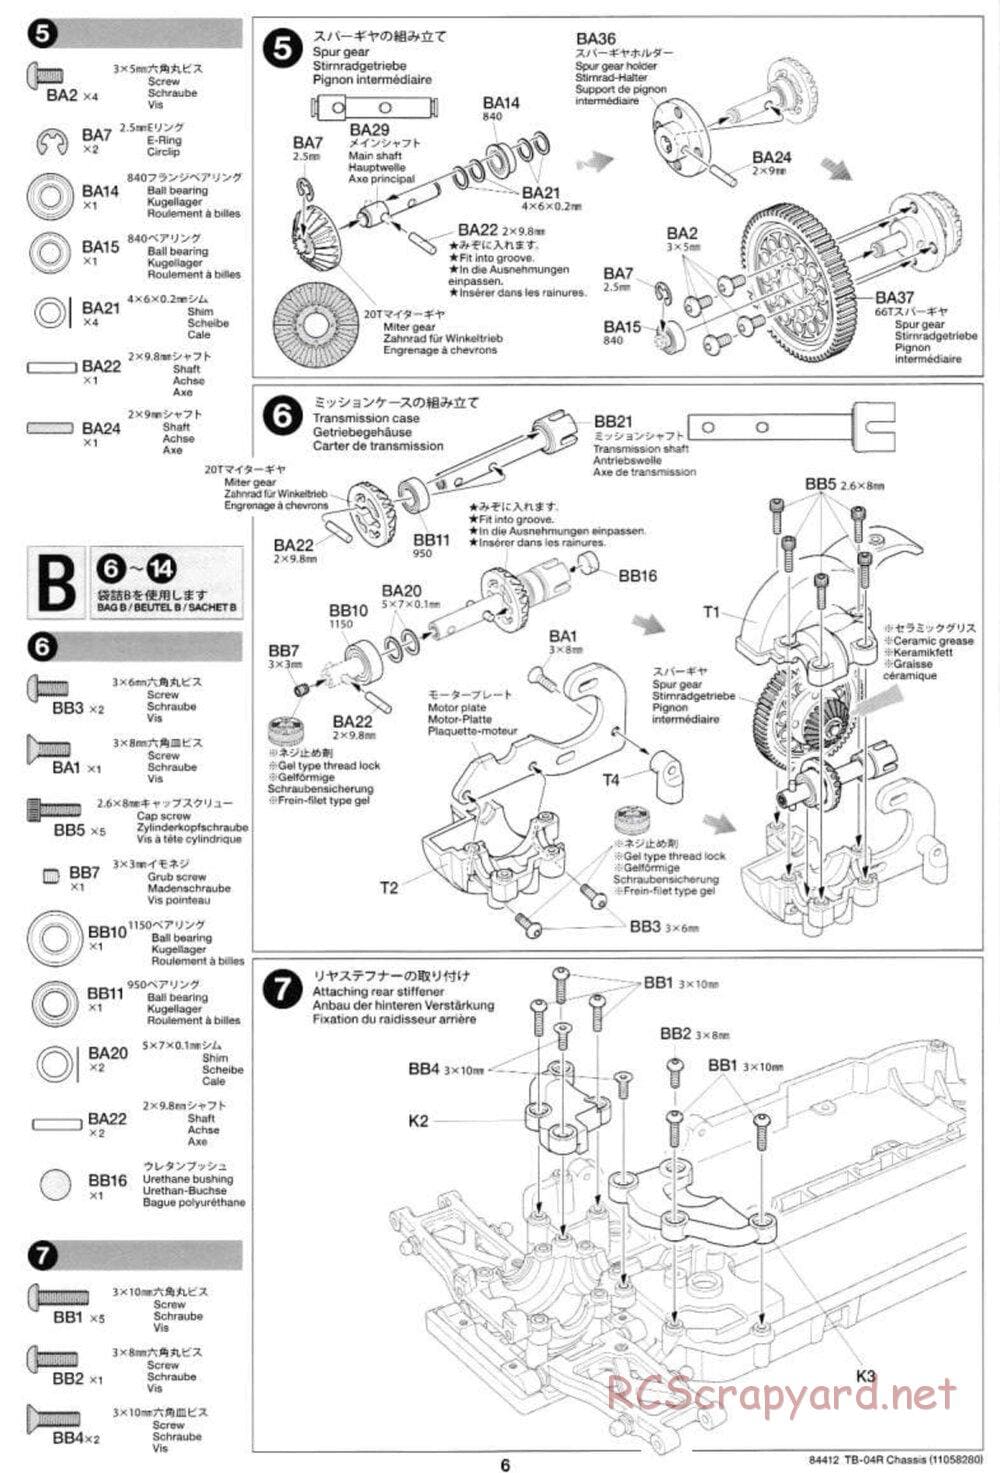 Tamiya - TB-04R Chassis Chassis - Manual - Page 6